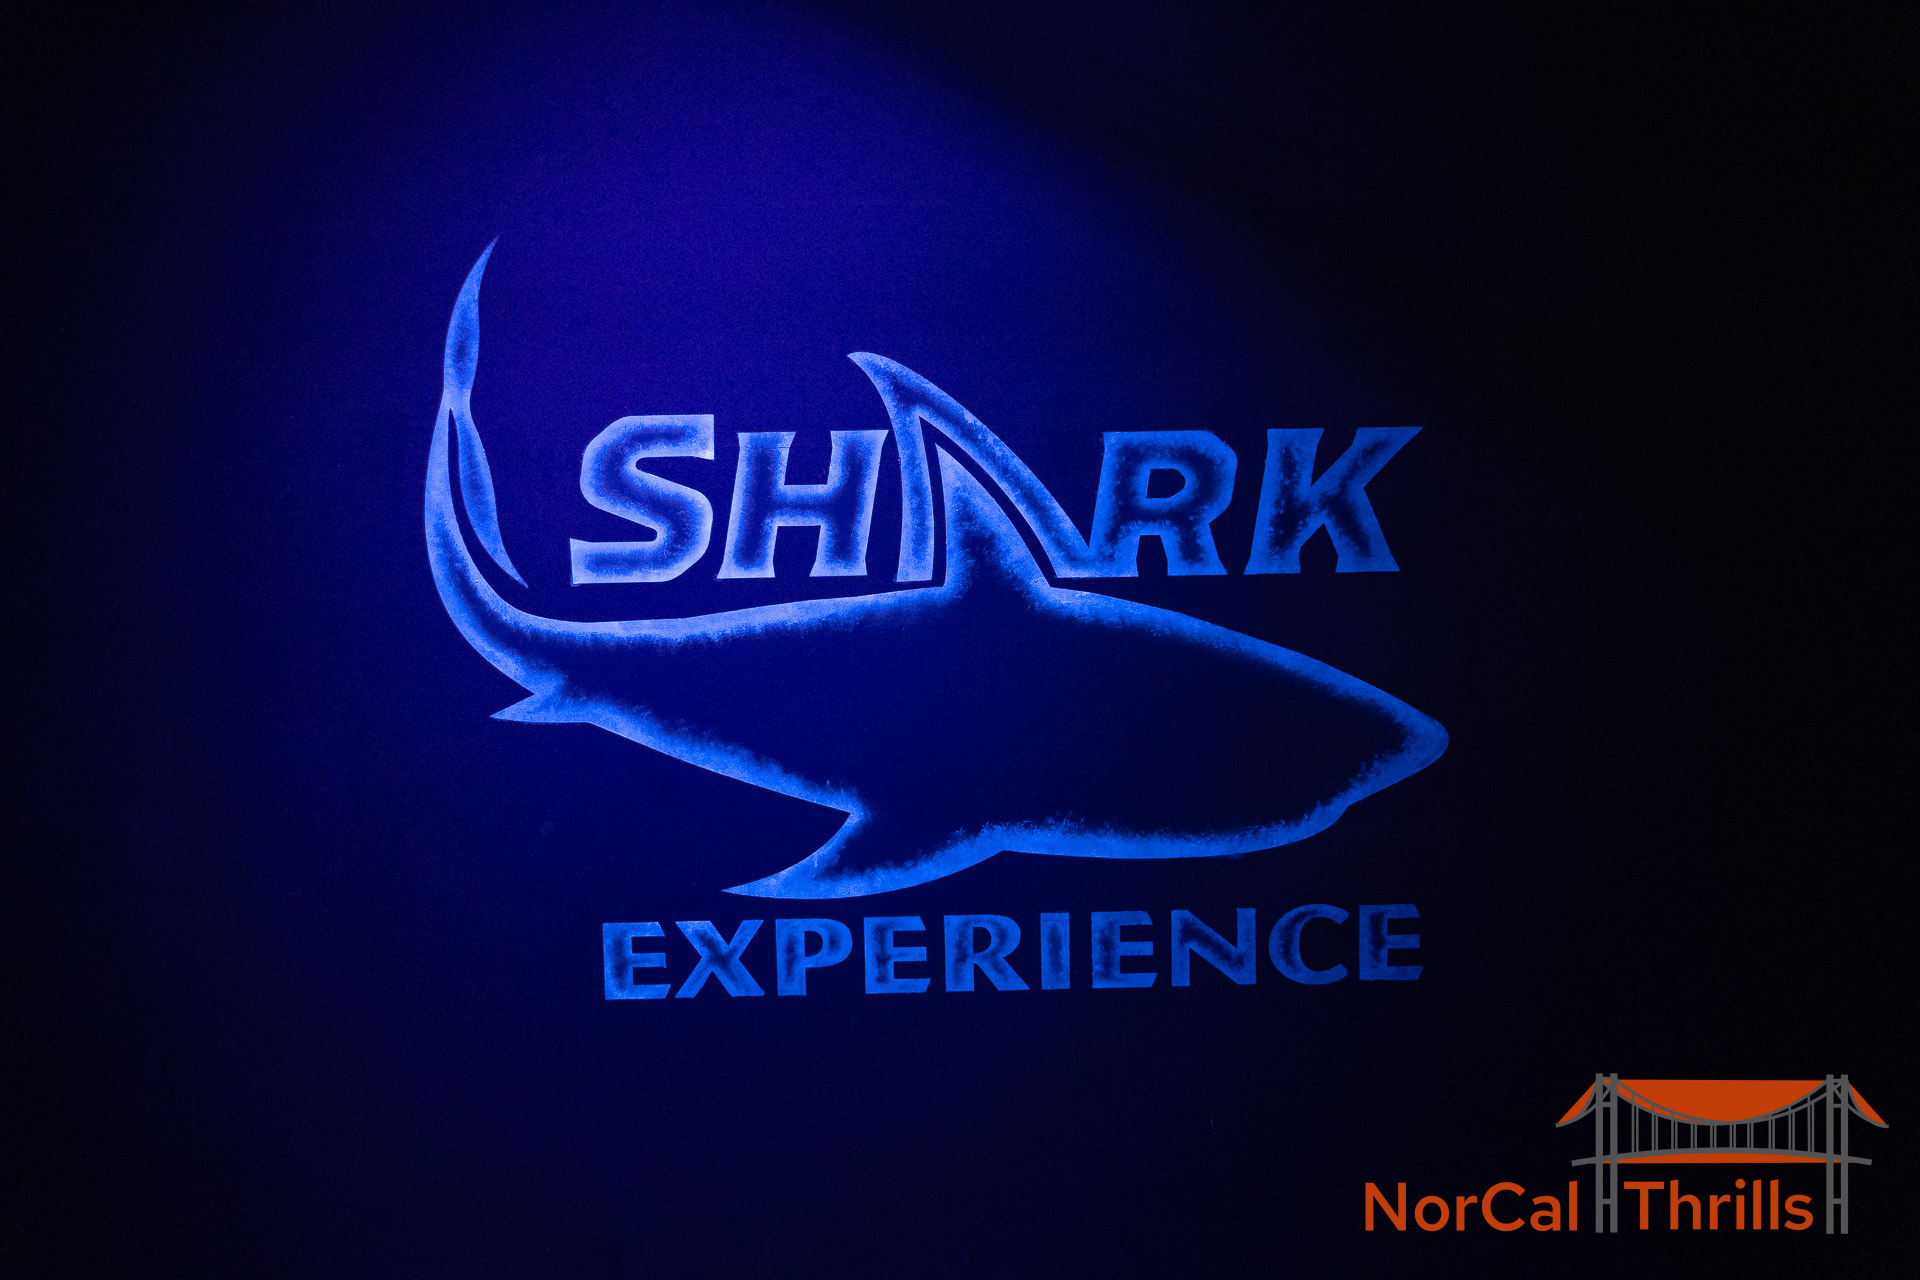 Shark Experience